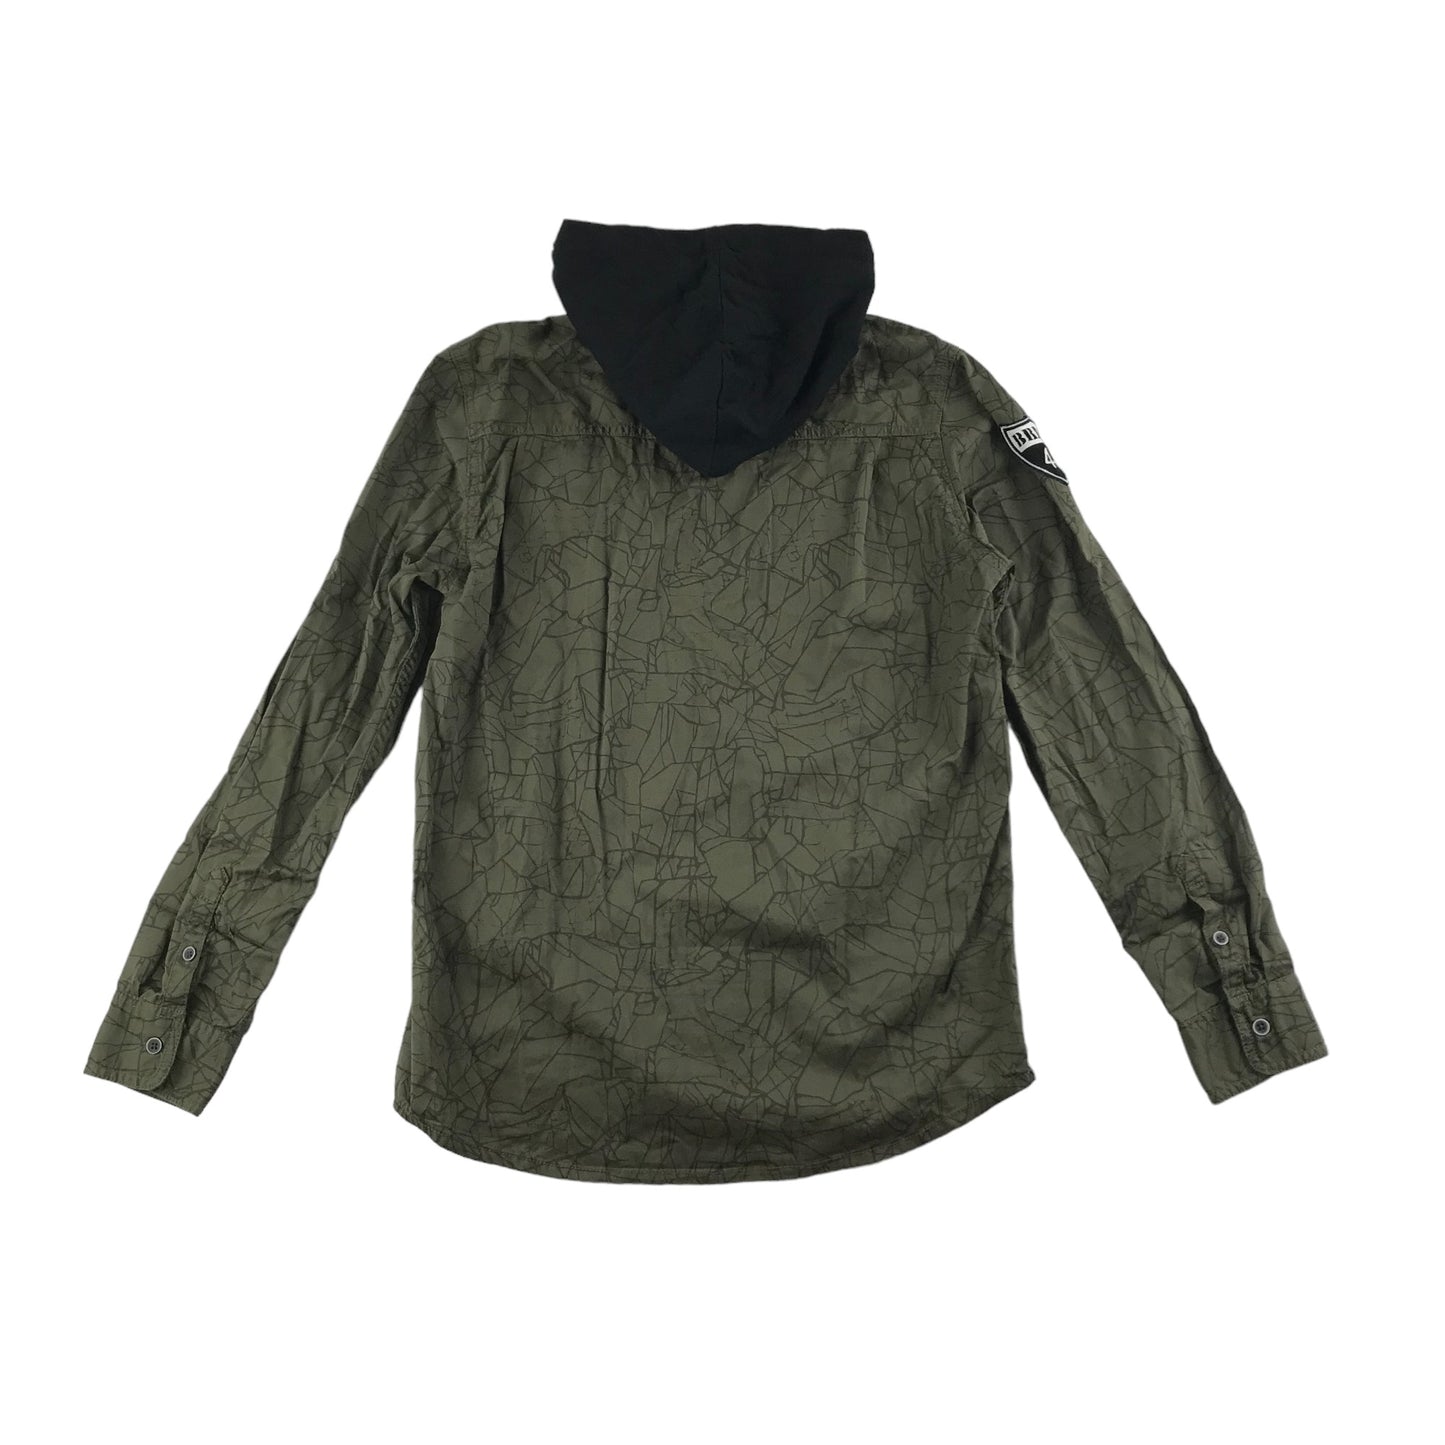 H&M Shirt Age 13 Khaki Green Pattern Hooded Sturdy Button Up